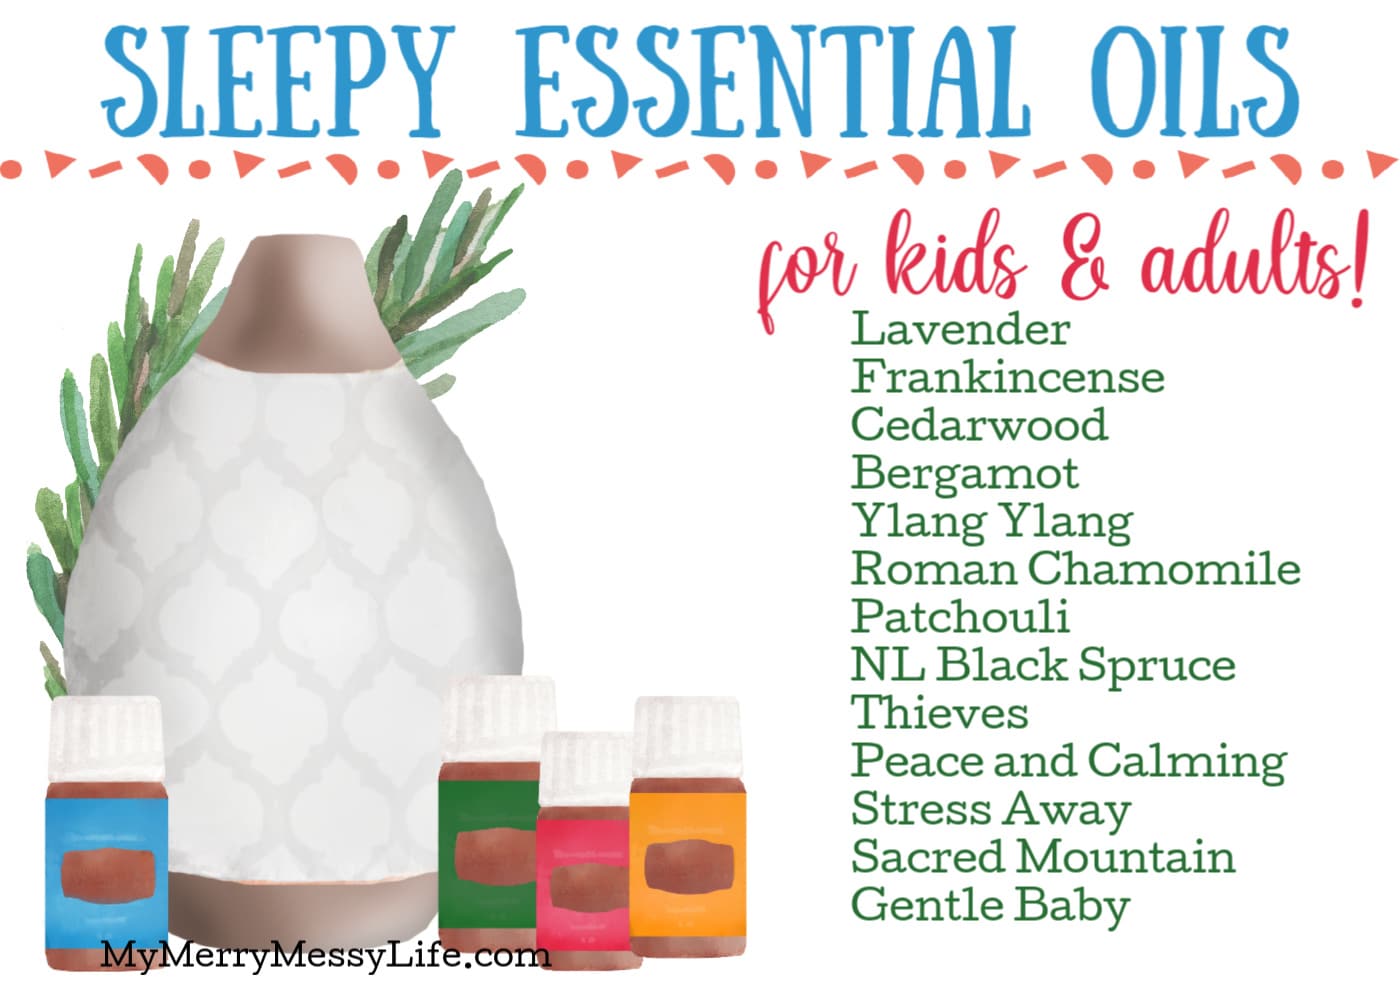 Essential oils to help kids and adults alike fall sleep and stay asleep